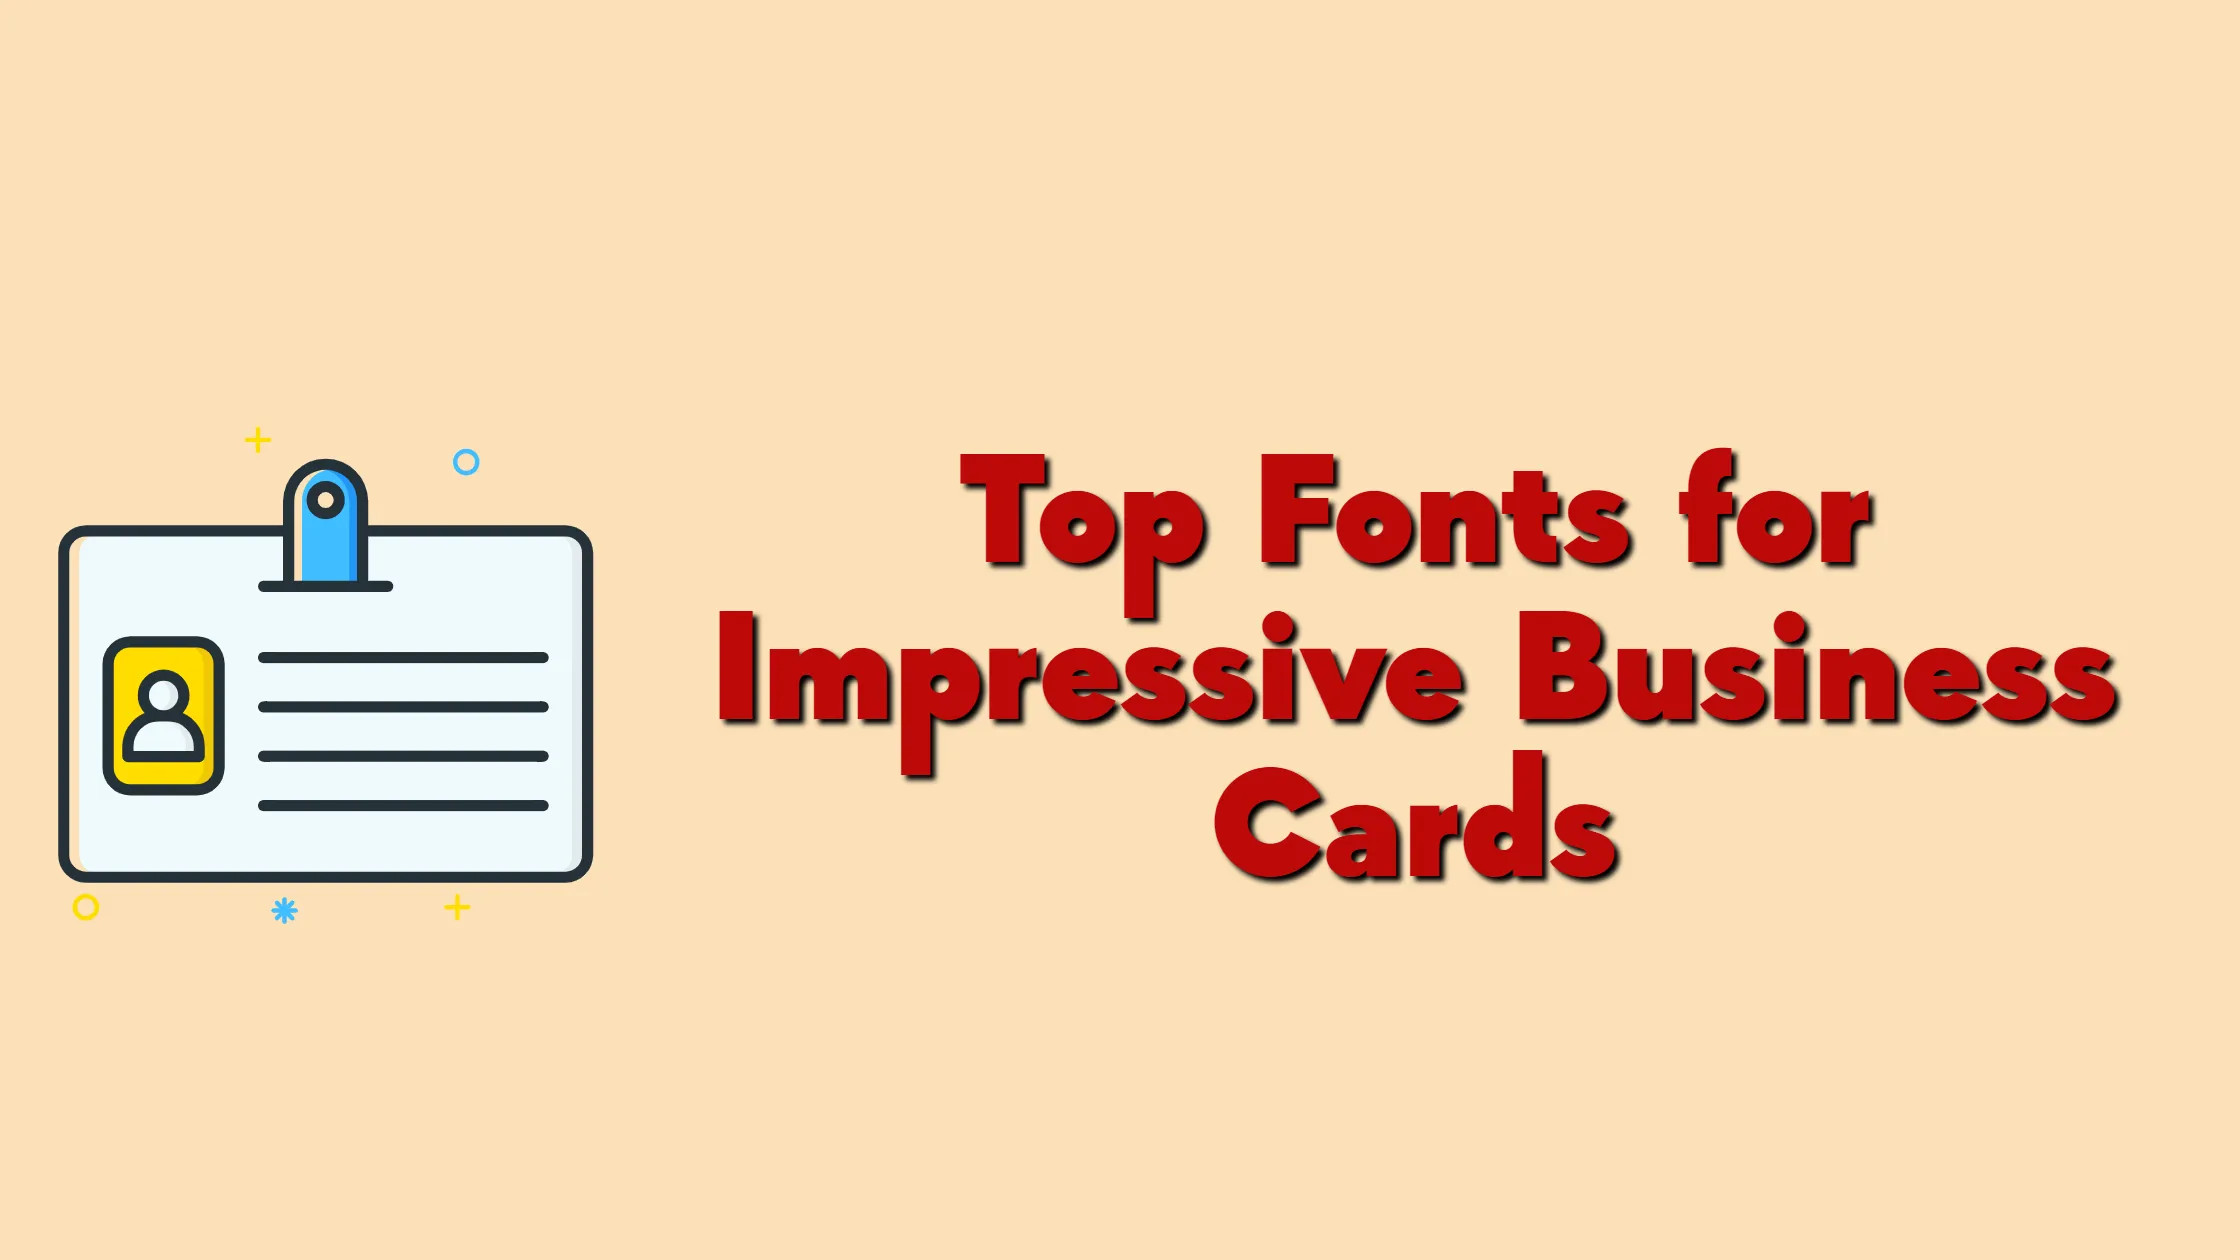 Top Fonts for Impressive Business Cards